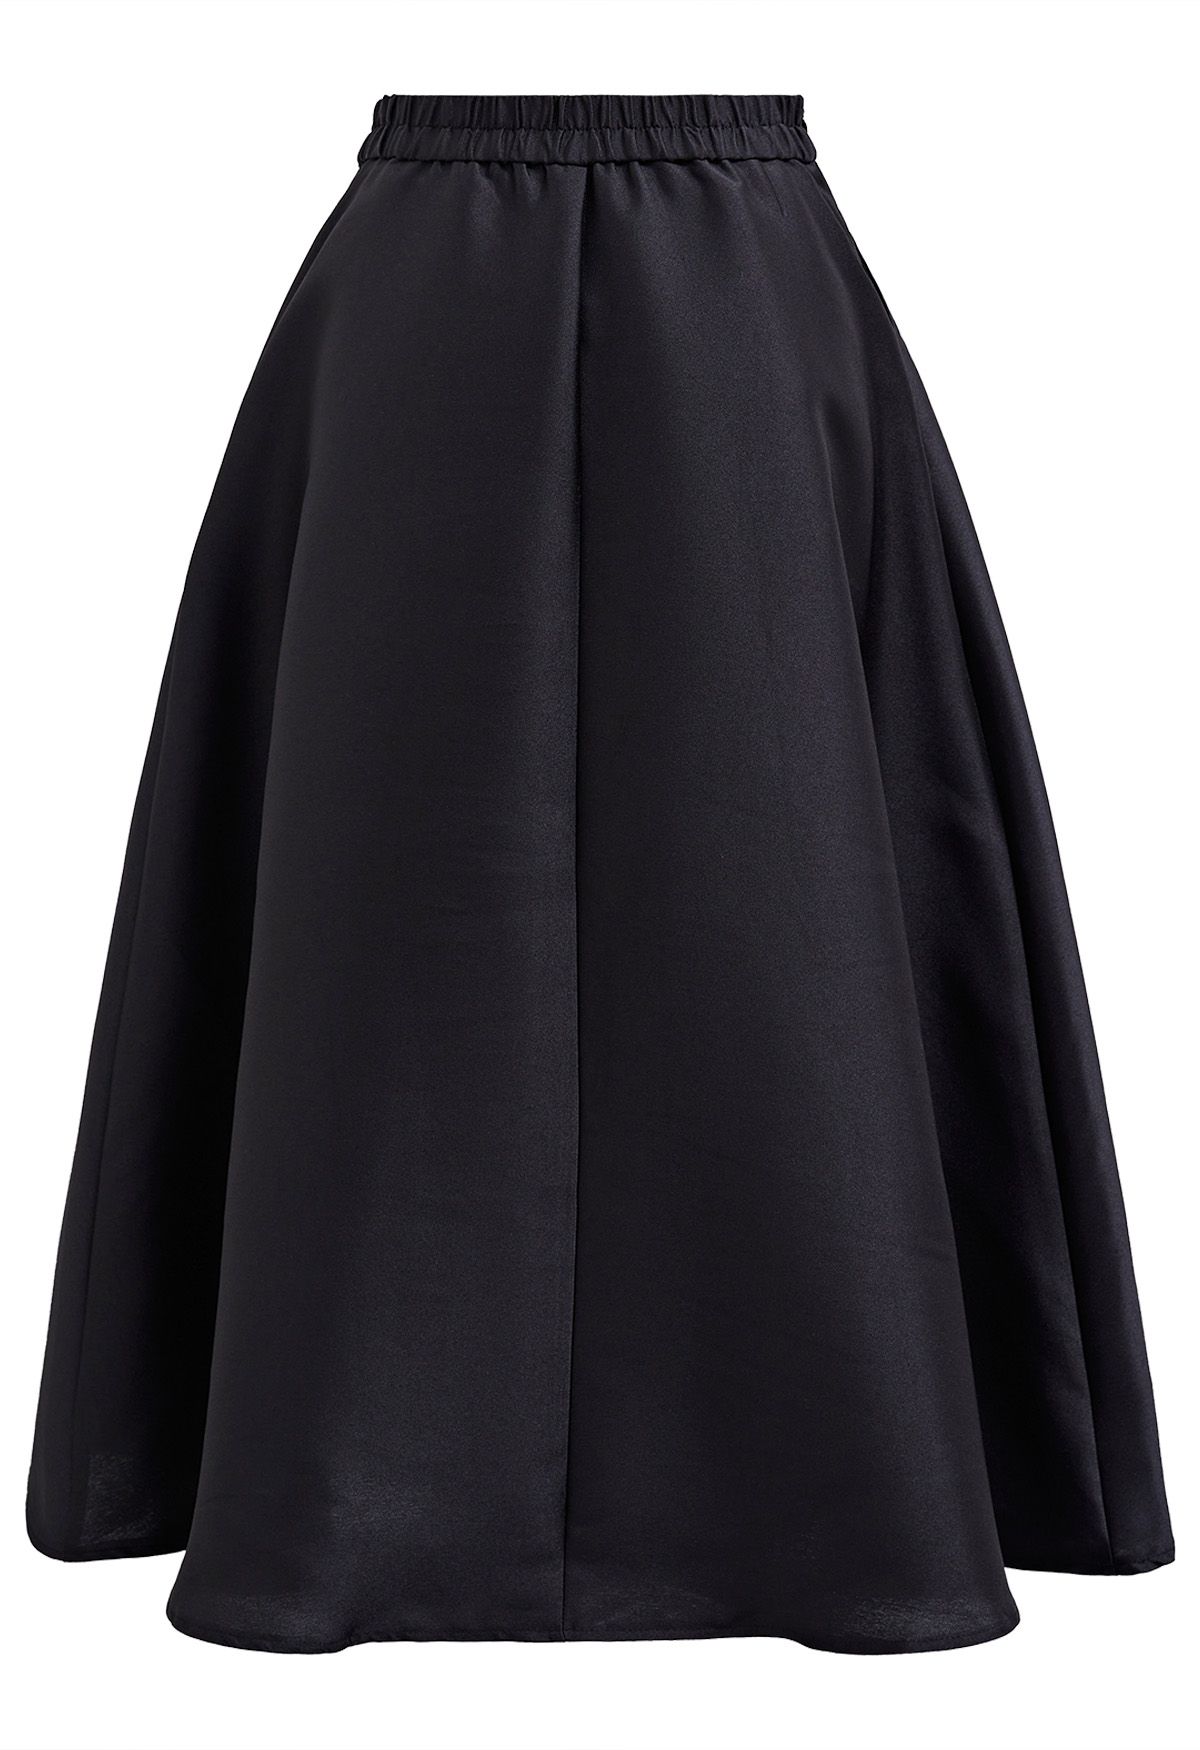 Sleek Side Pockets Pleated A-Line Midi Skirt in Black - Retro, Indie ...